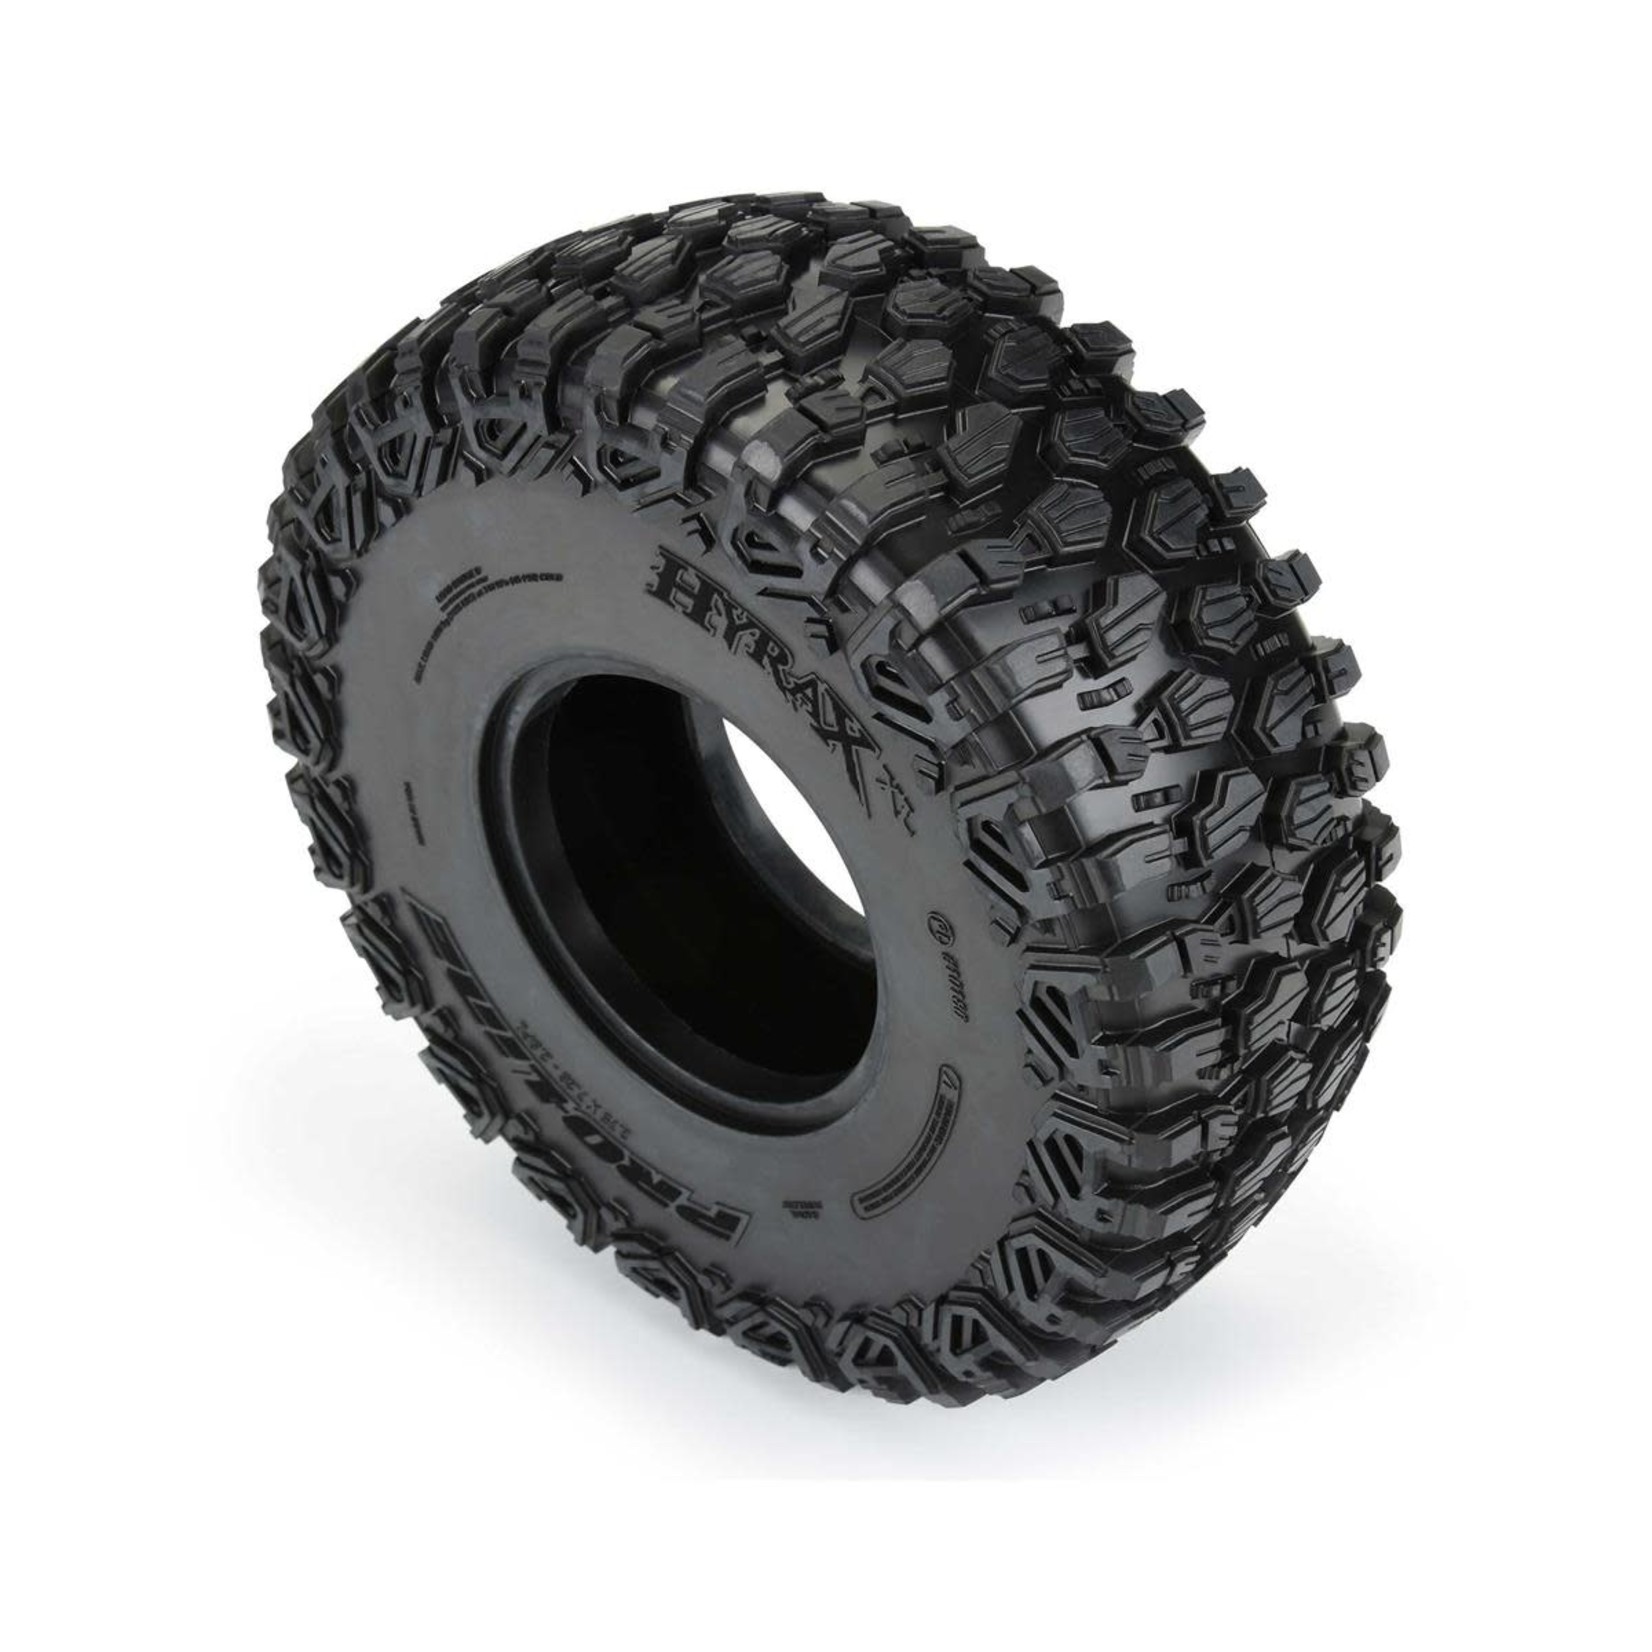 Pro-Line Pro-Line Hyrax XL 2.9" Rock Terrain Crawler Tires w/Memory Foam (2) (G8) #10186-14